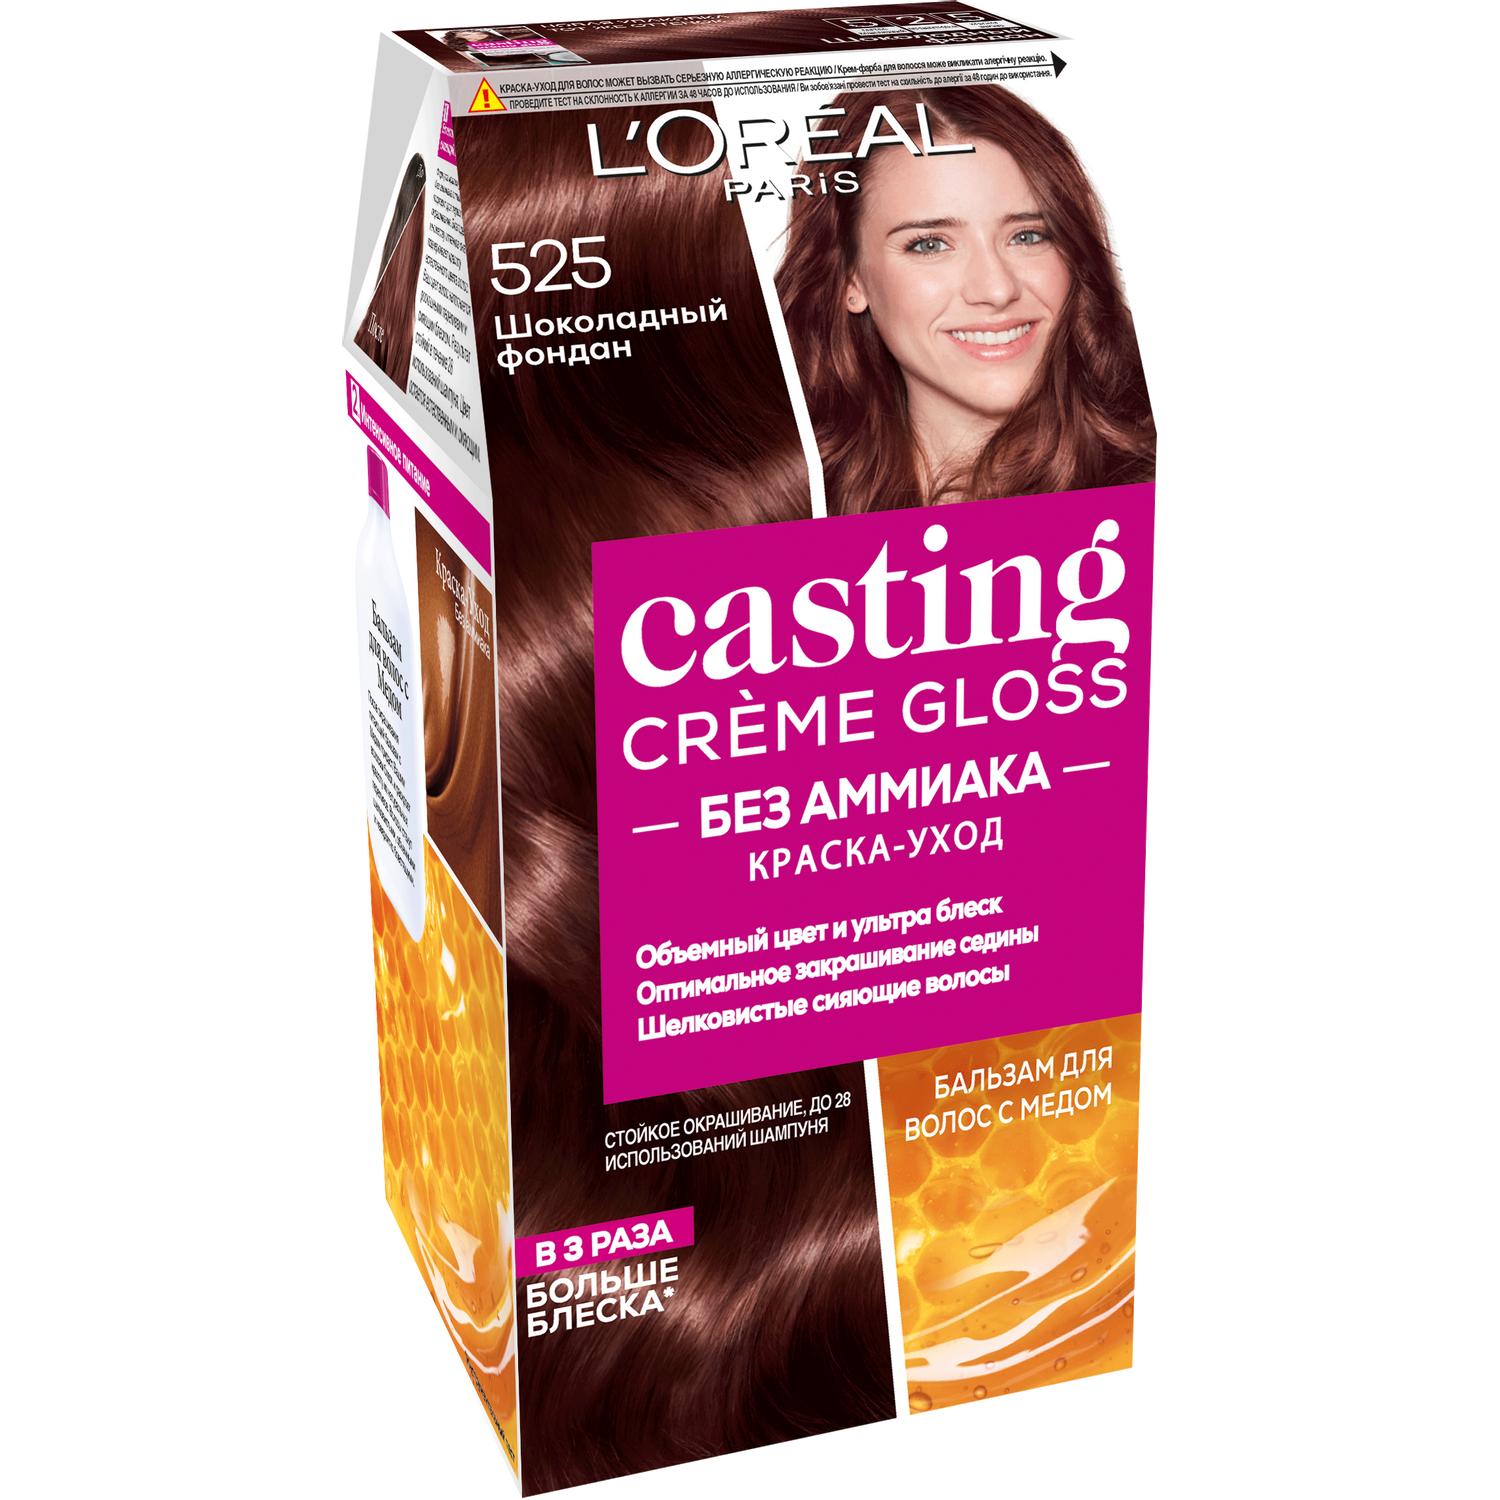 Краска для волос L'Oreal Paris Casting Creme Gloss 525 Шоколадный фондан краска l’oreal casting creme gloss 535 254 мл шоколад a3285100